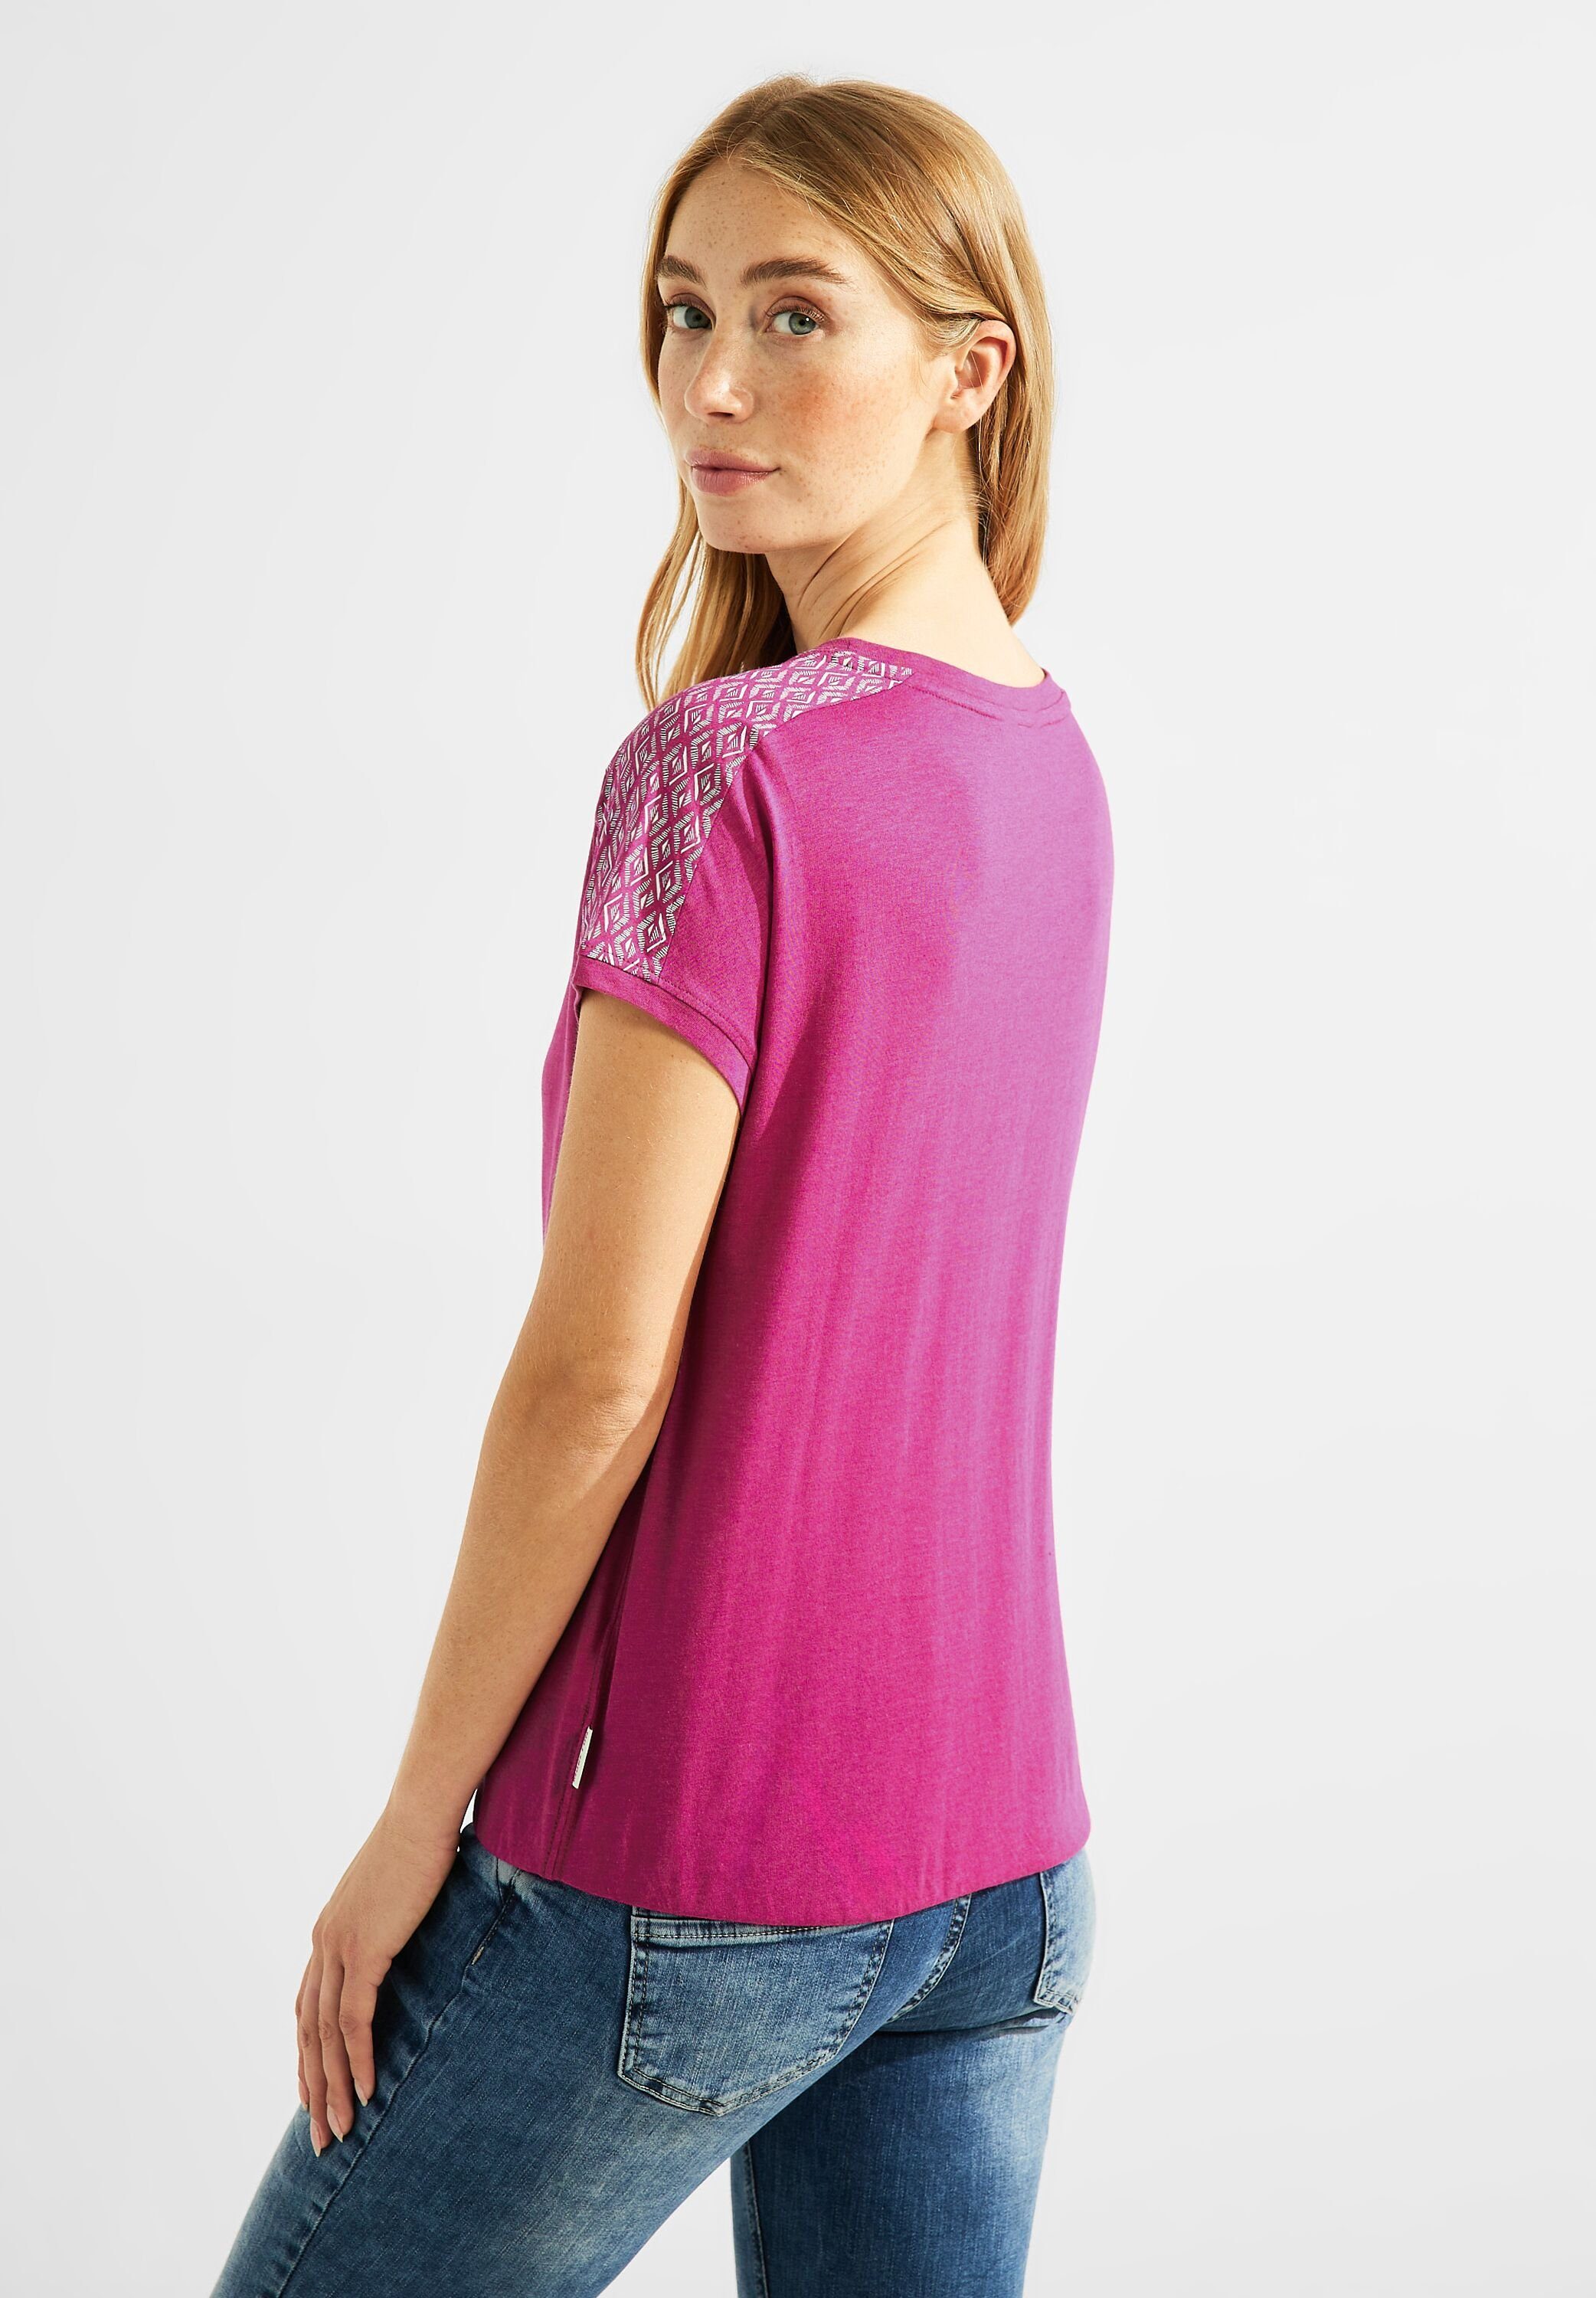 Cecil T-Shirt aus softem Materialmix, Elastiksaum